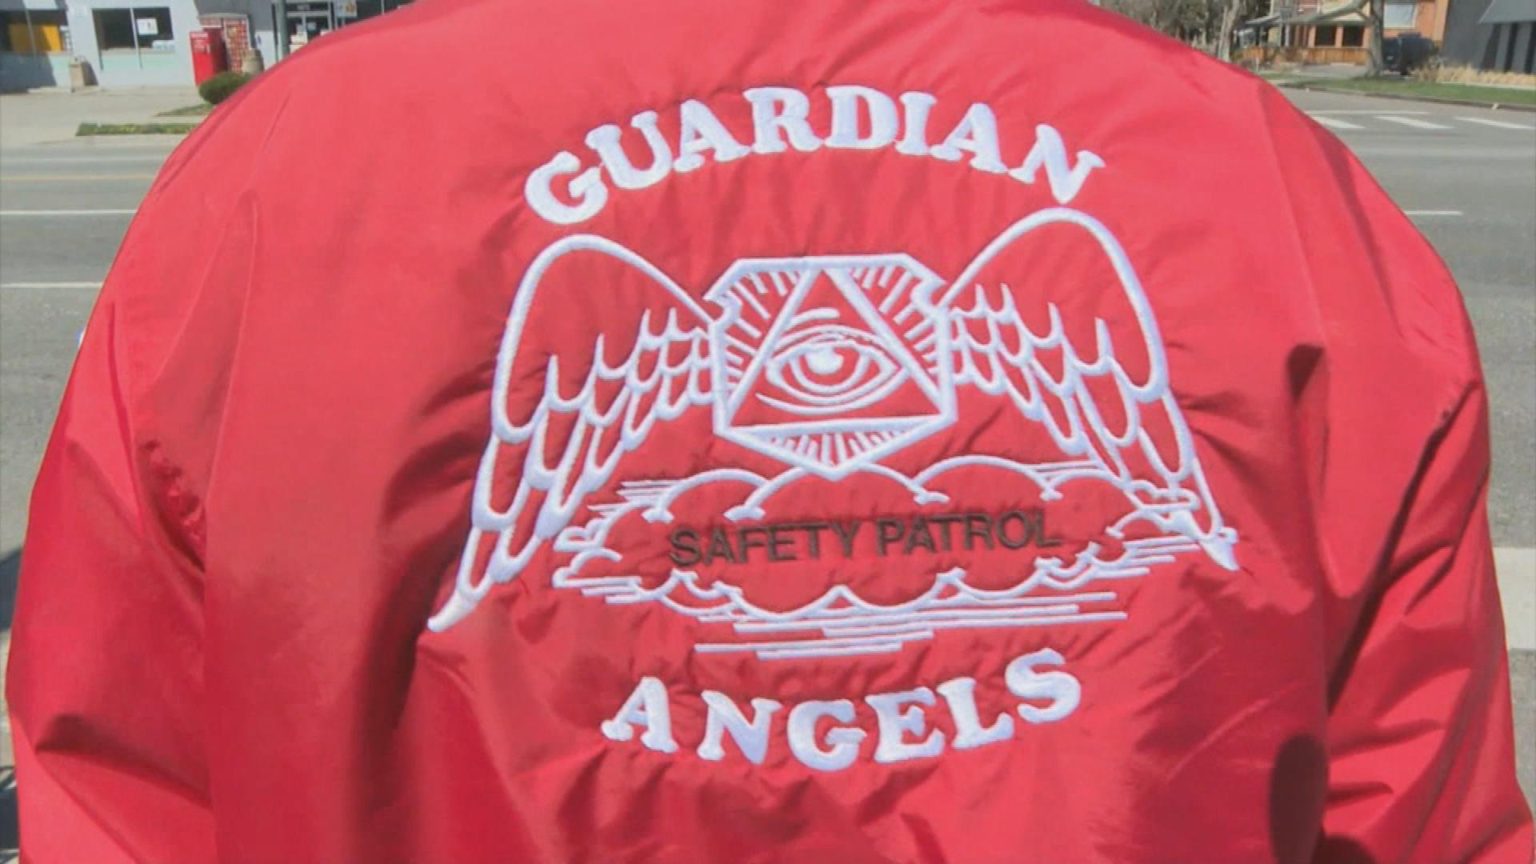 Denver Guardian Angels Update Nyctastemakers